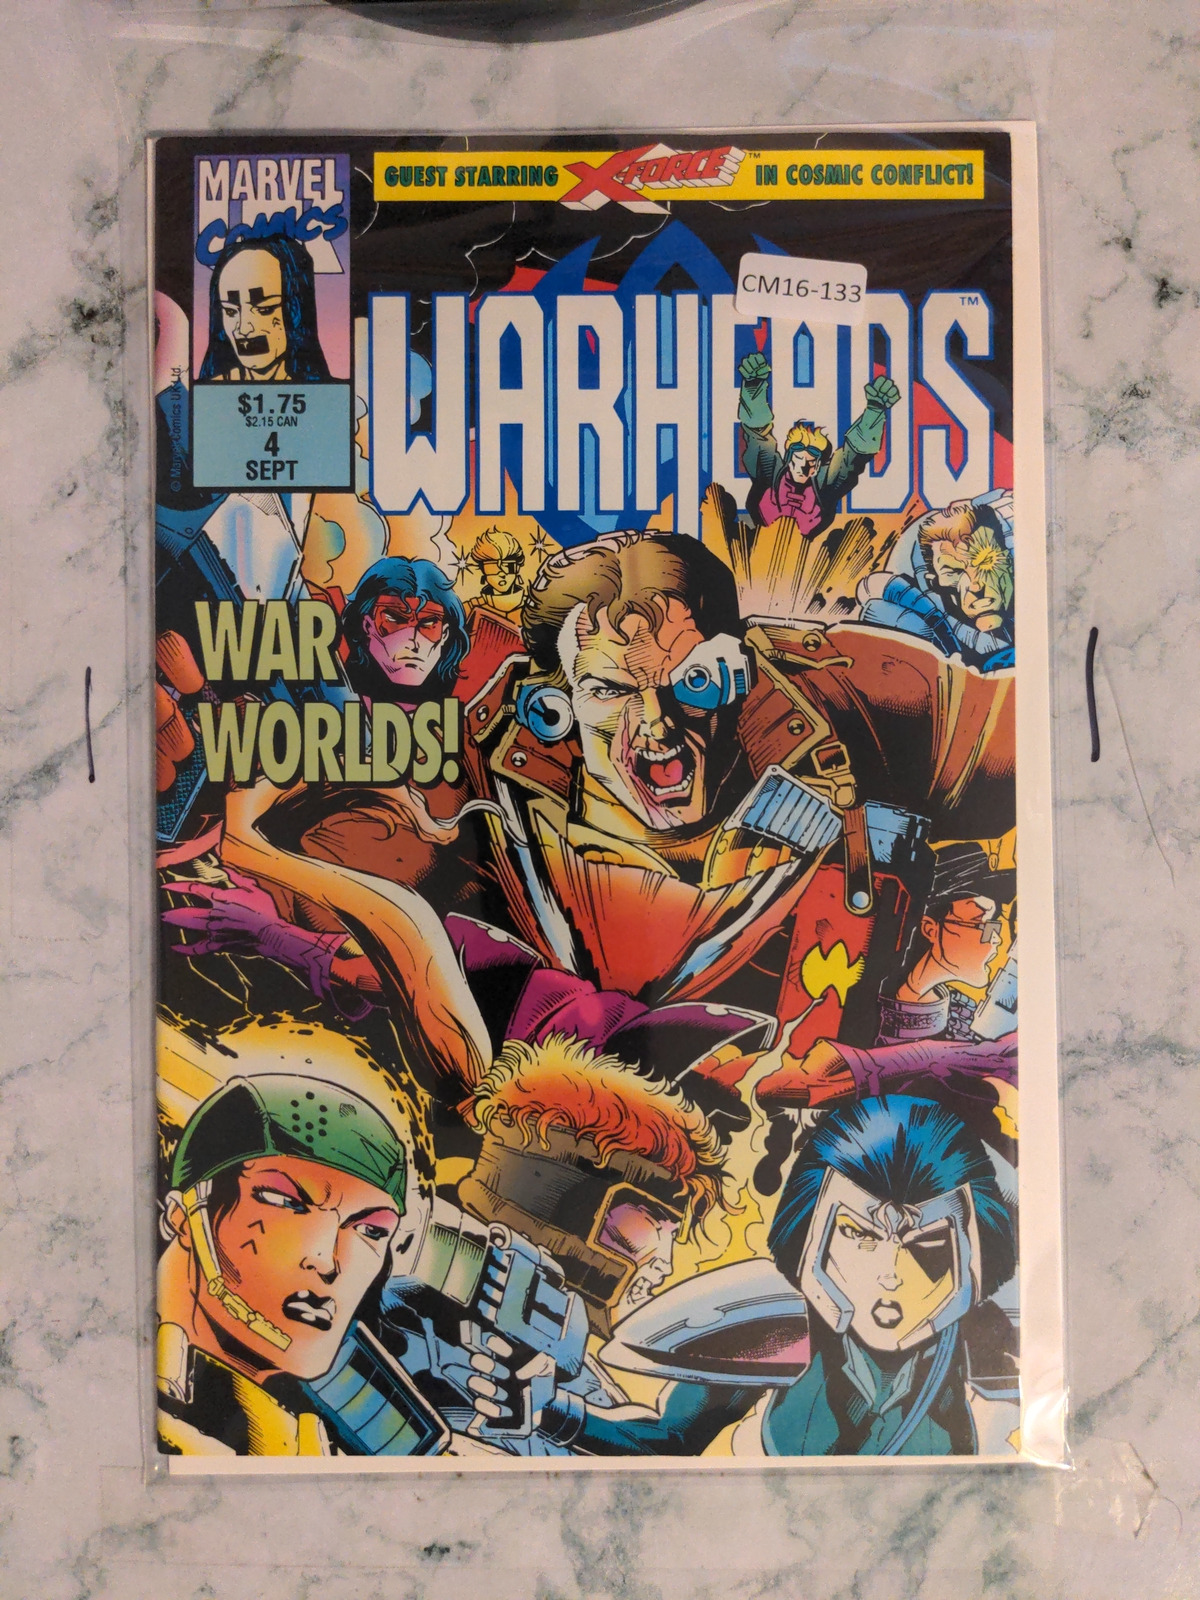 WARHEADS #4 8.0 MARVEL UK COMIC BOOK CM16-133